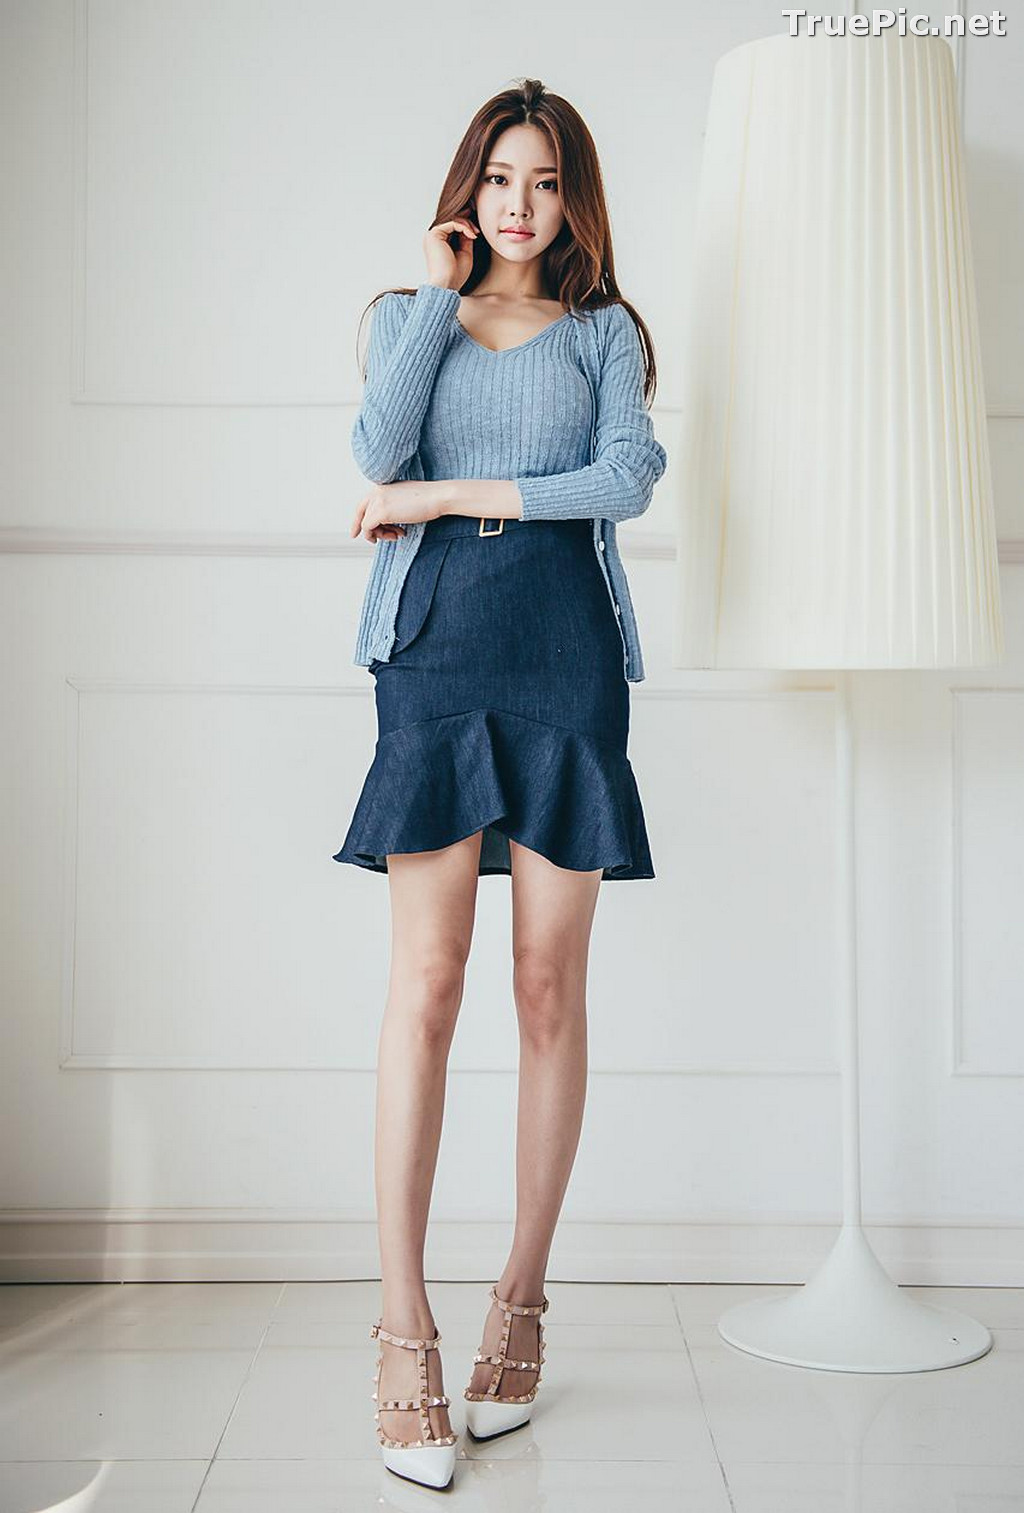 Image Korean Beautiful Model – Park Jung Yoon – Fashion Photography #6 - TruePic.net - Picture-10